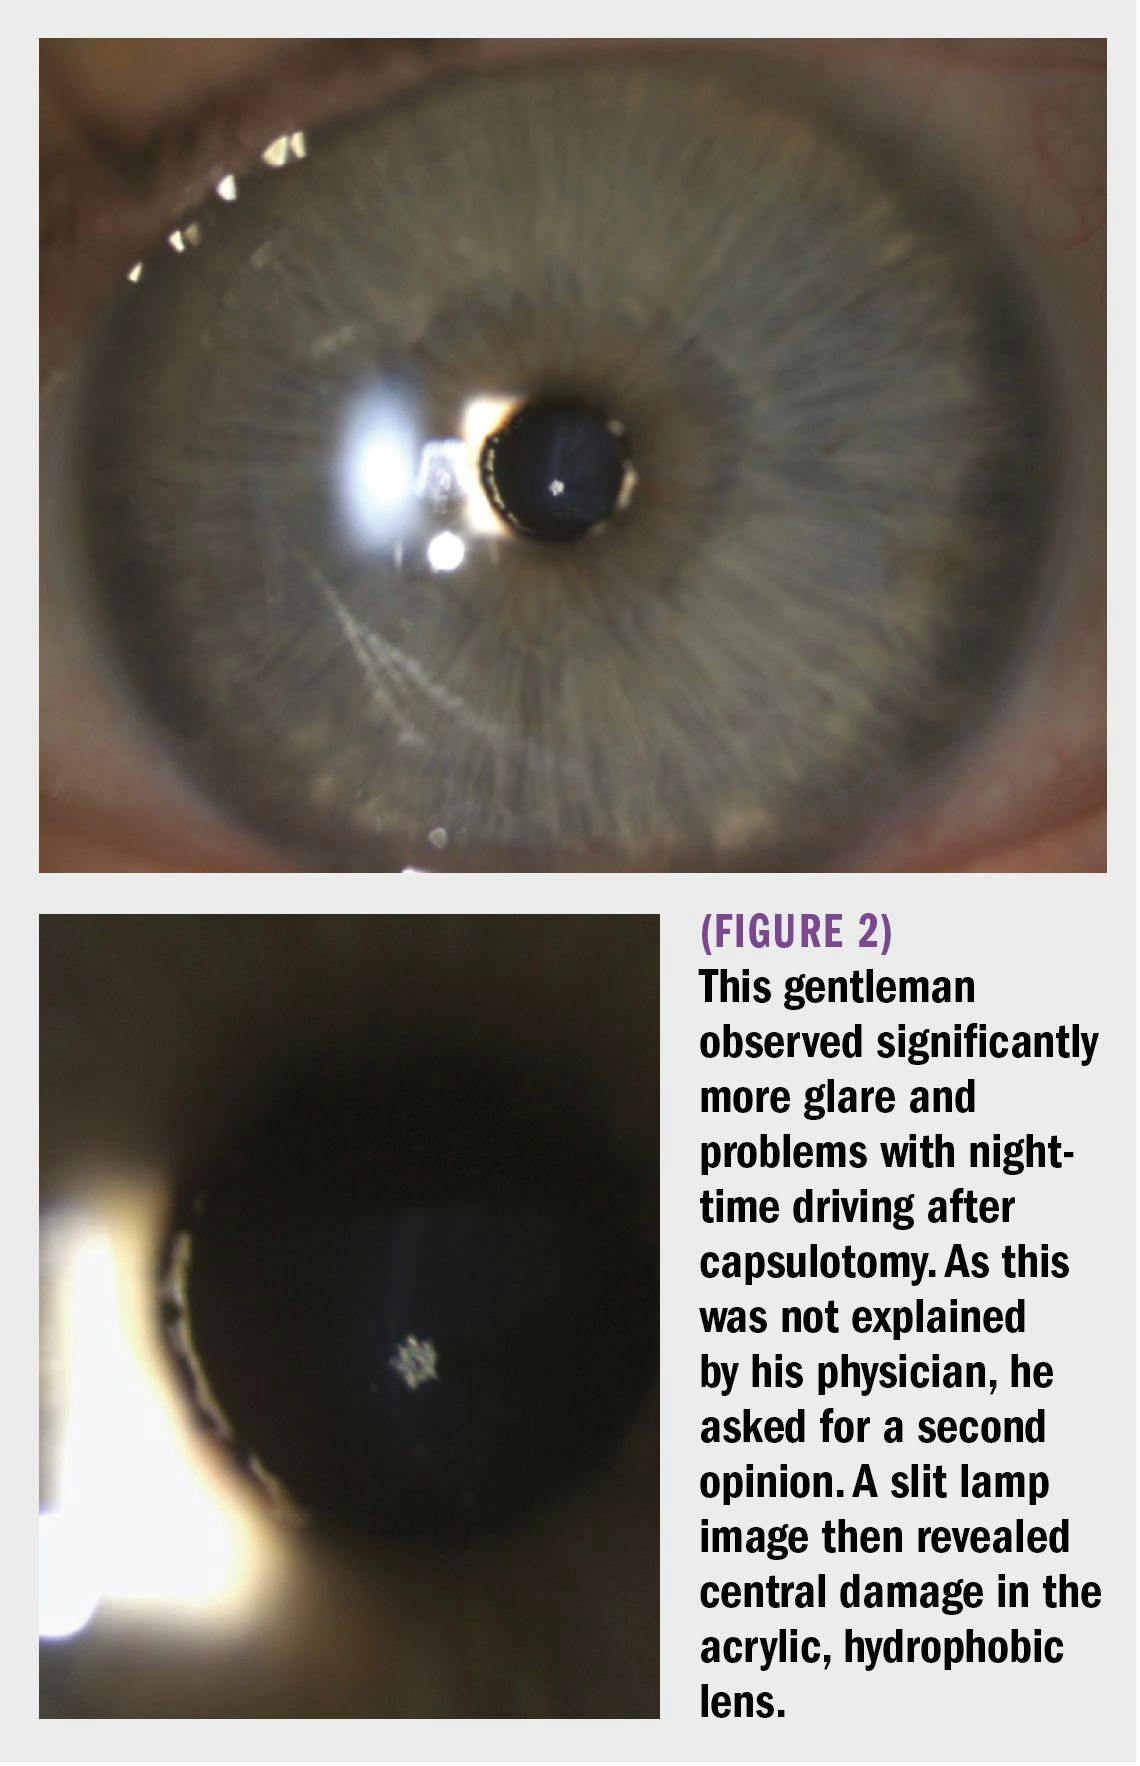 central damage in eye lens shown by slit lamp